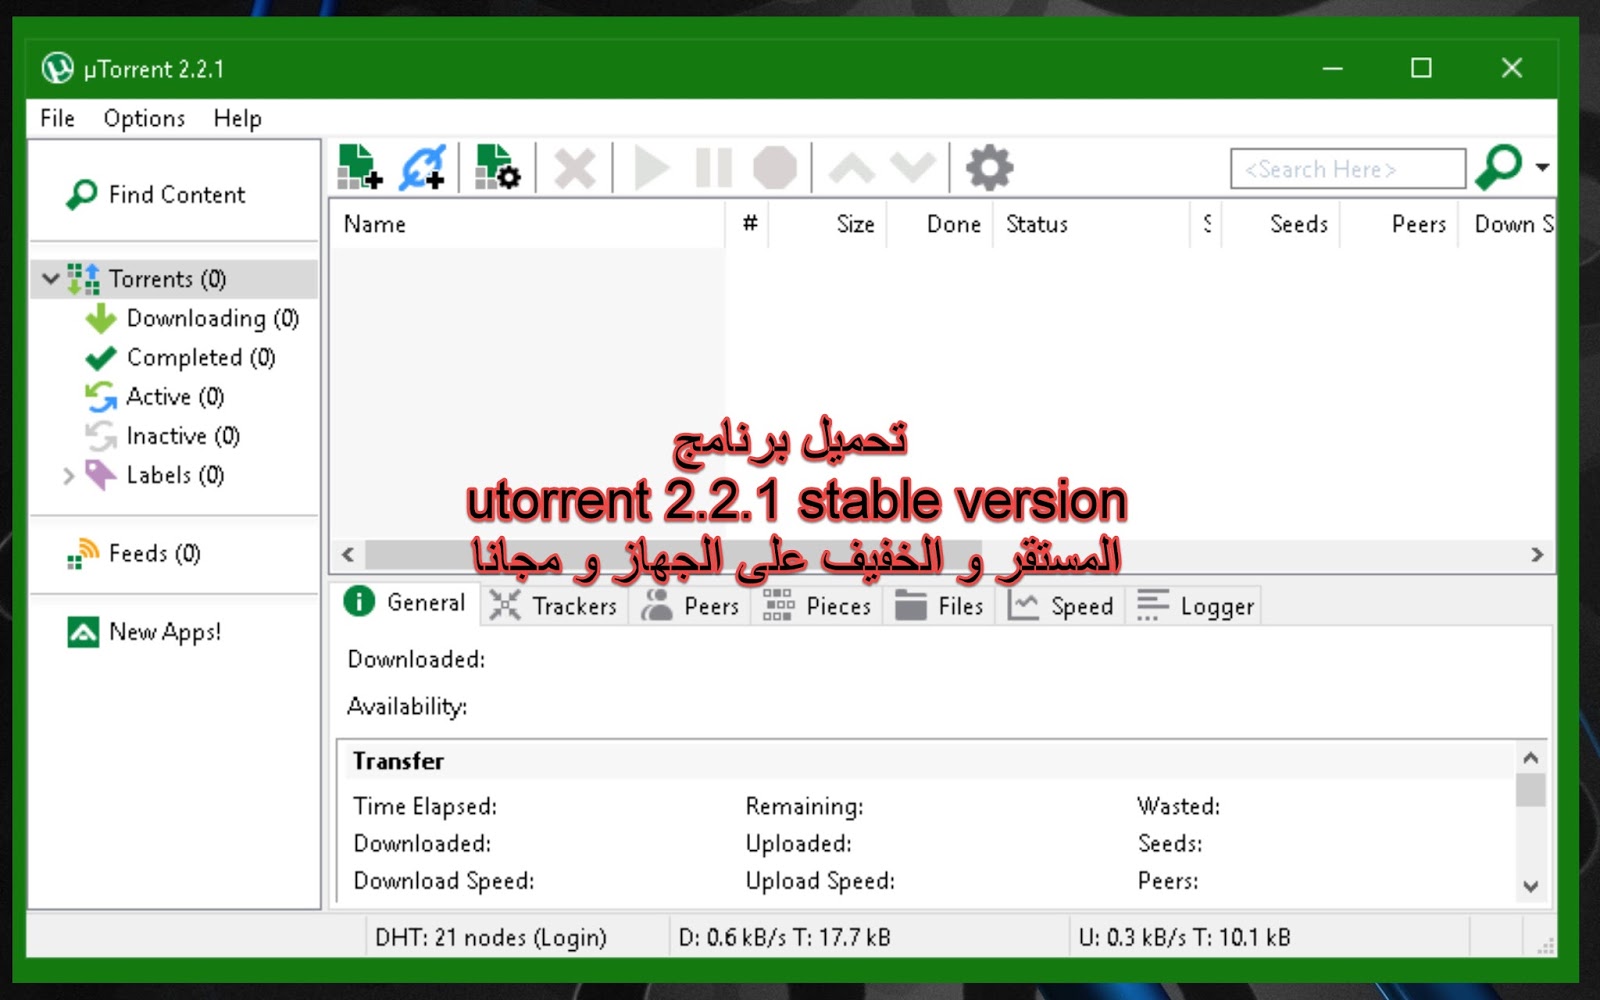 old version of utorrent 2.2.1